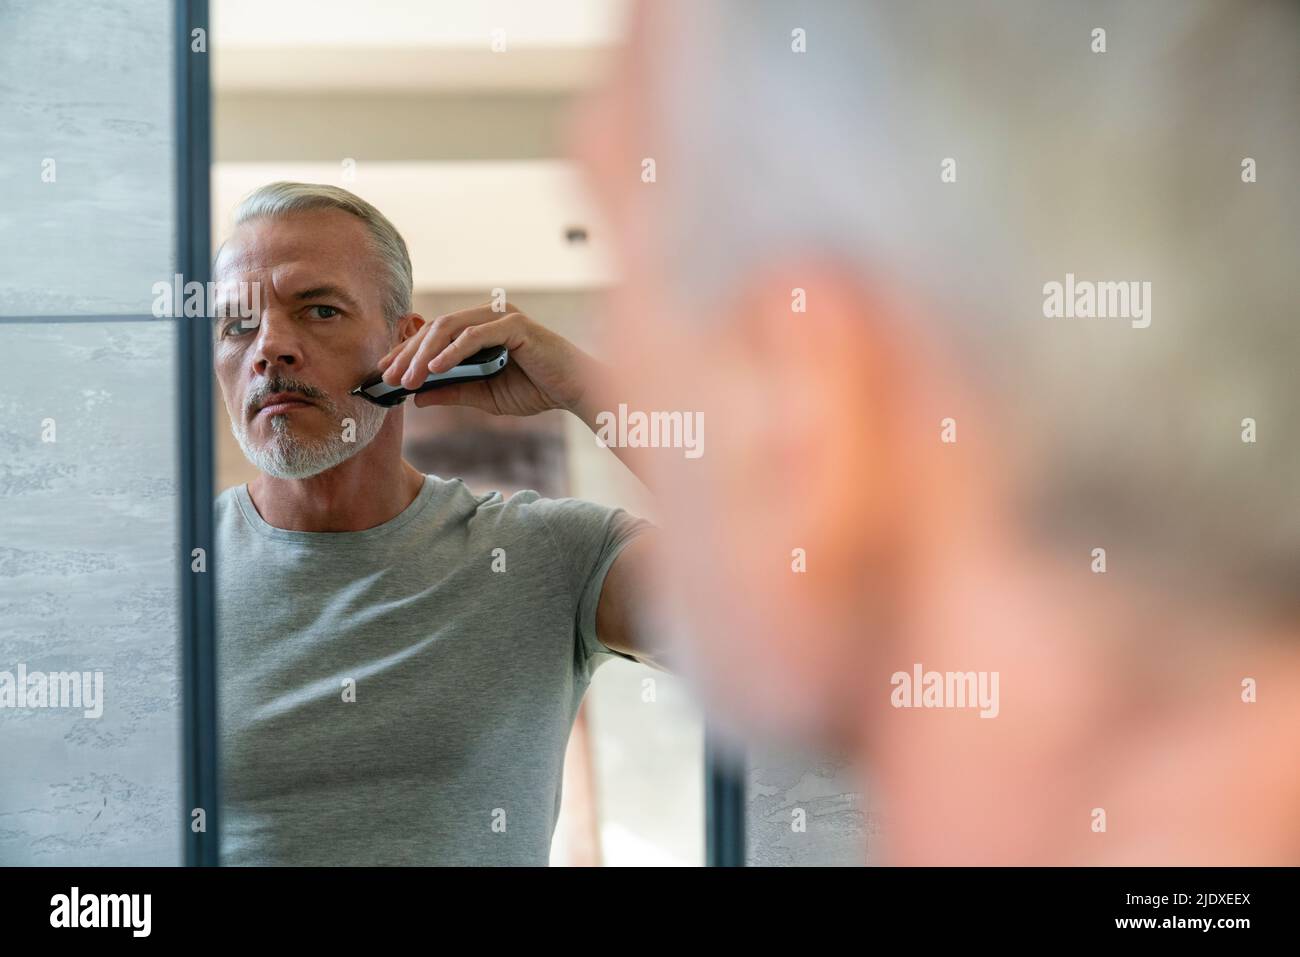 Man shaving beard with electric razor looking at mirror Stock Photo